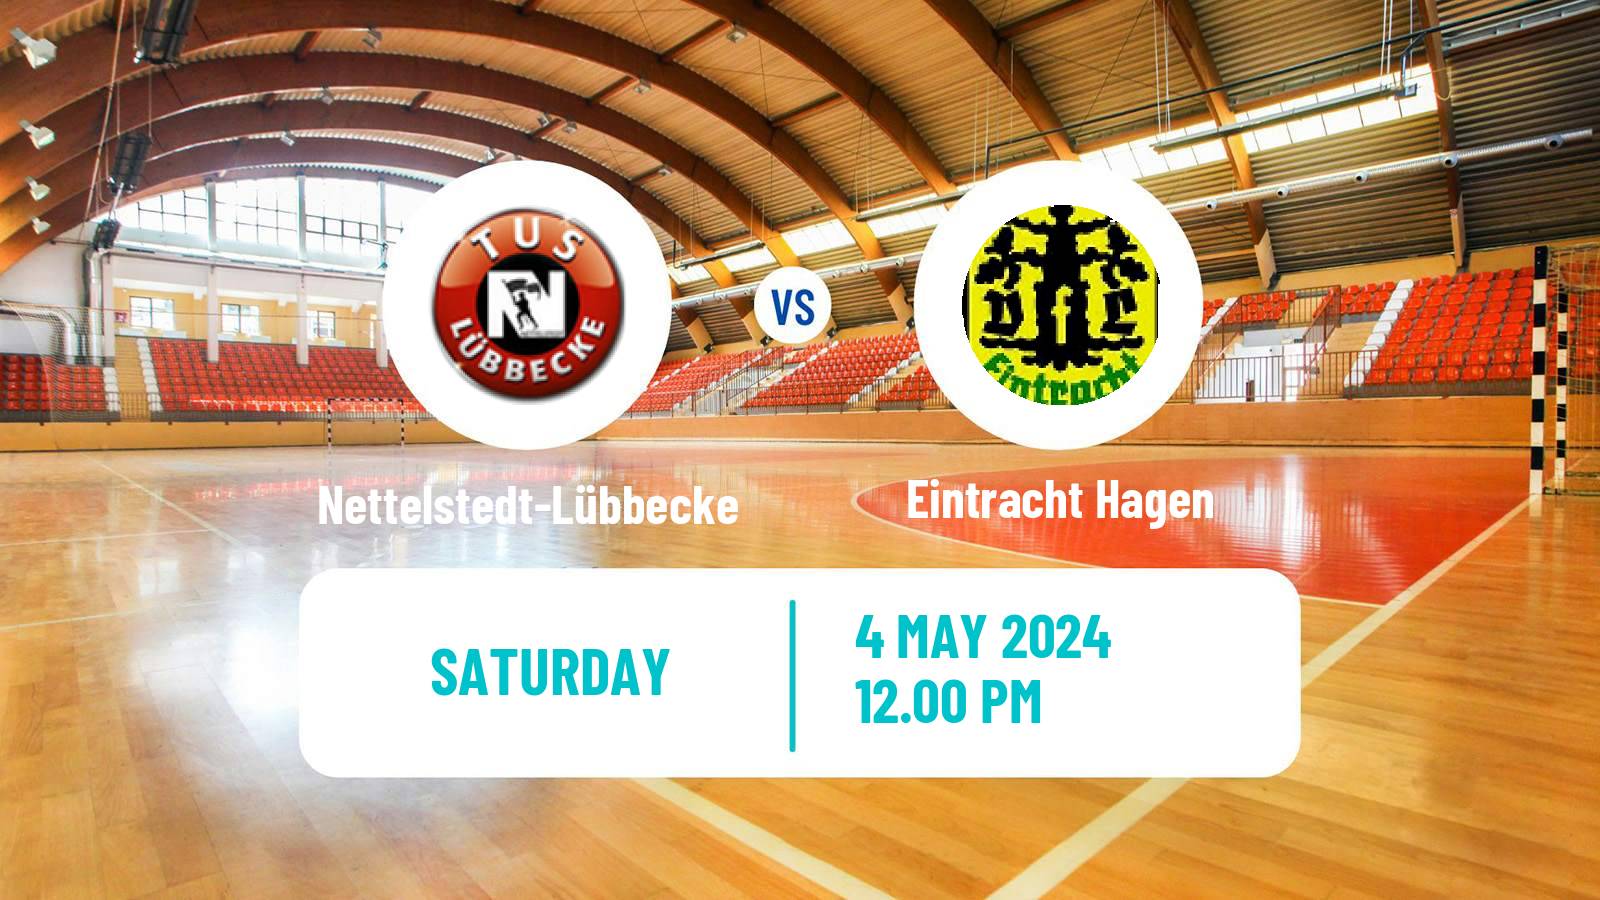 Handball German 2 Bundesliga Handball Nettelstedt-Lübbecke - Eintracht Hagen